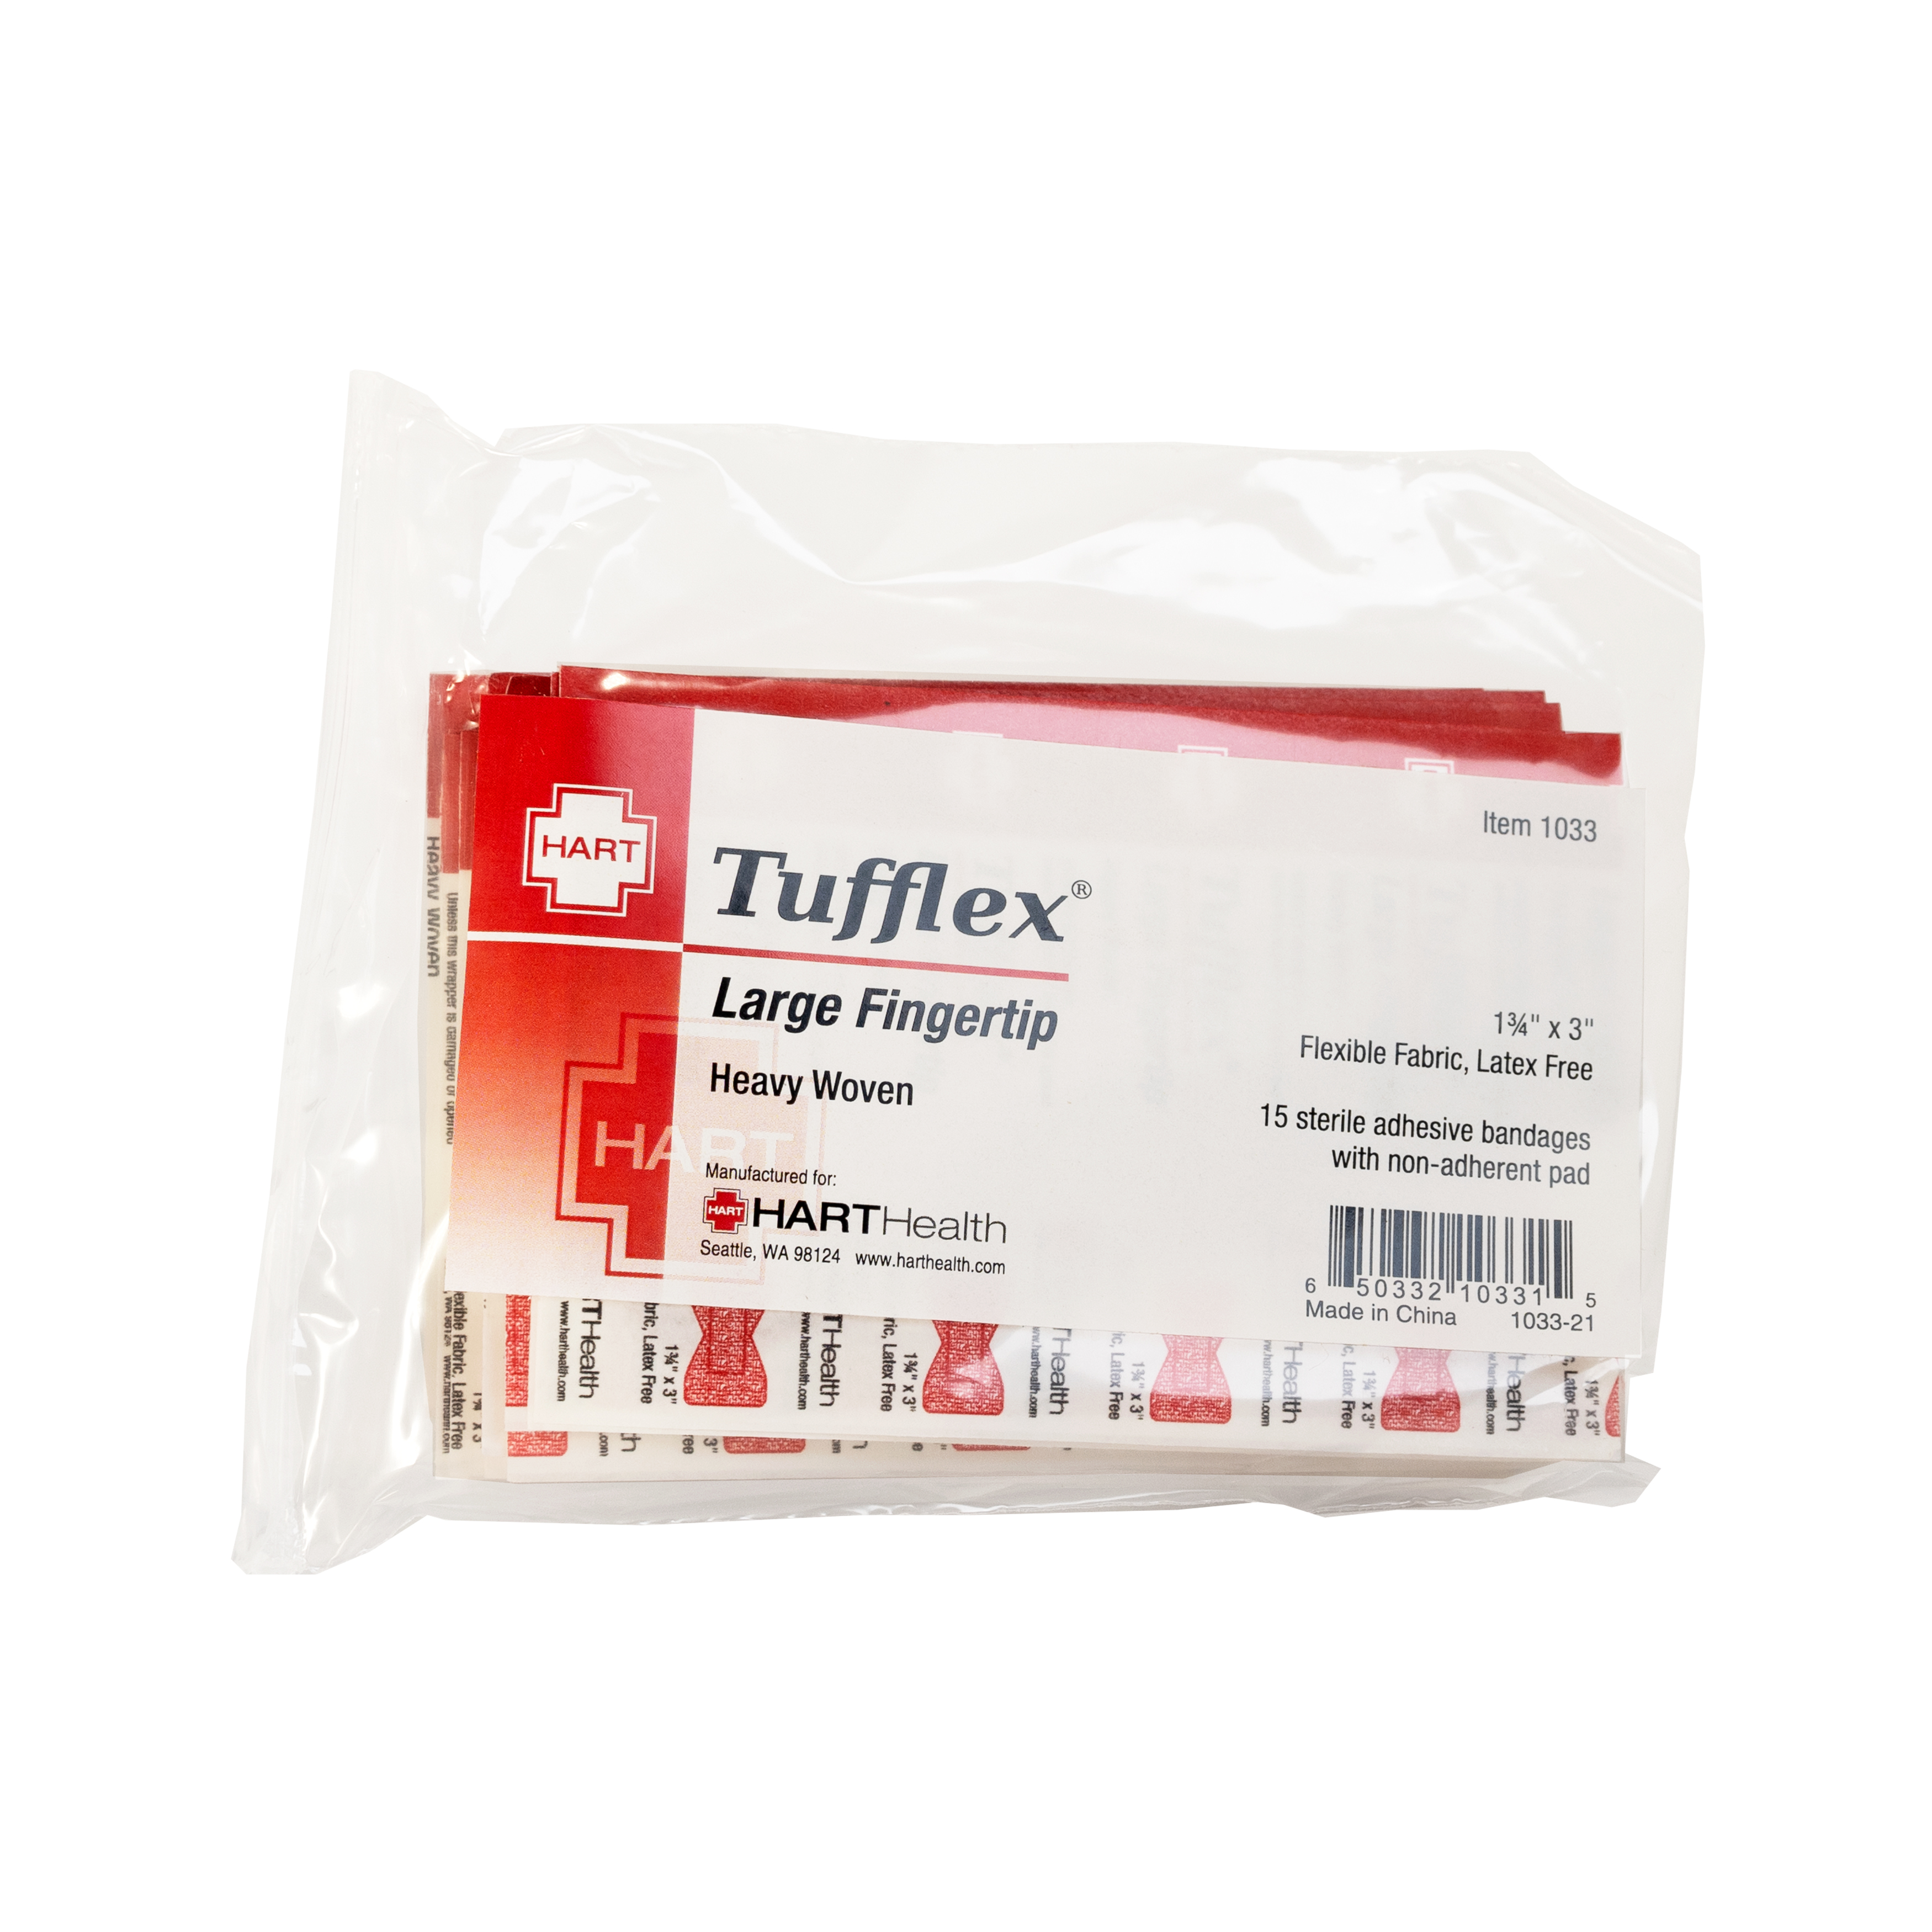 Tufflex, Large Fingertip Adhesive Bandages, Heavy Woven Elastic Cloth, 1-3/4' x 3', 15 per bag